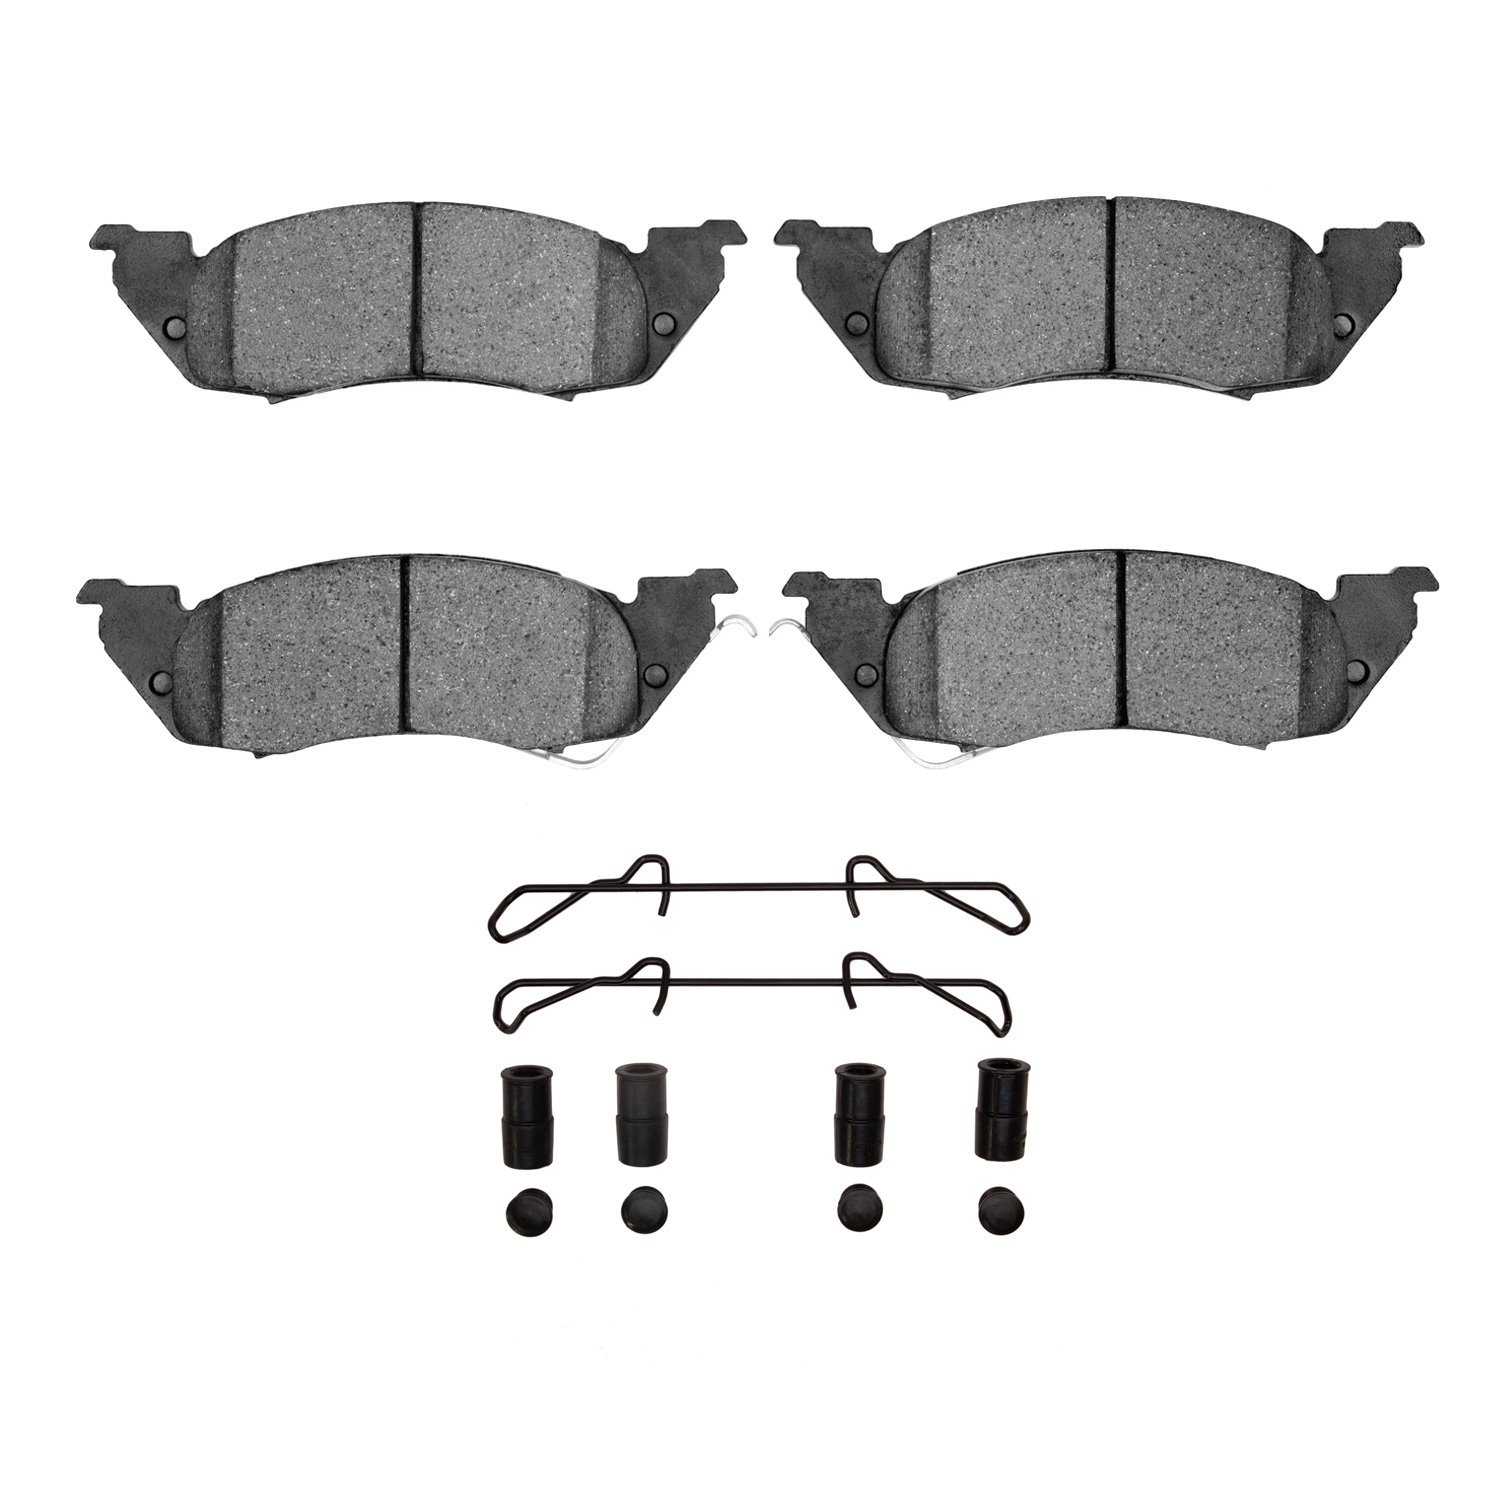 1310-0529-02 3000-Series Ceramic Brake Pads & Hardware Kit, 1991-1998 Mopar, Position: Front